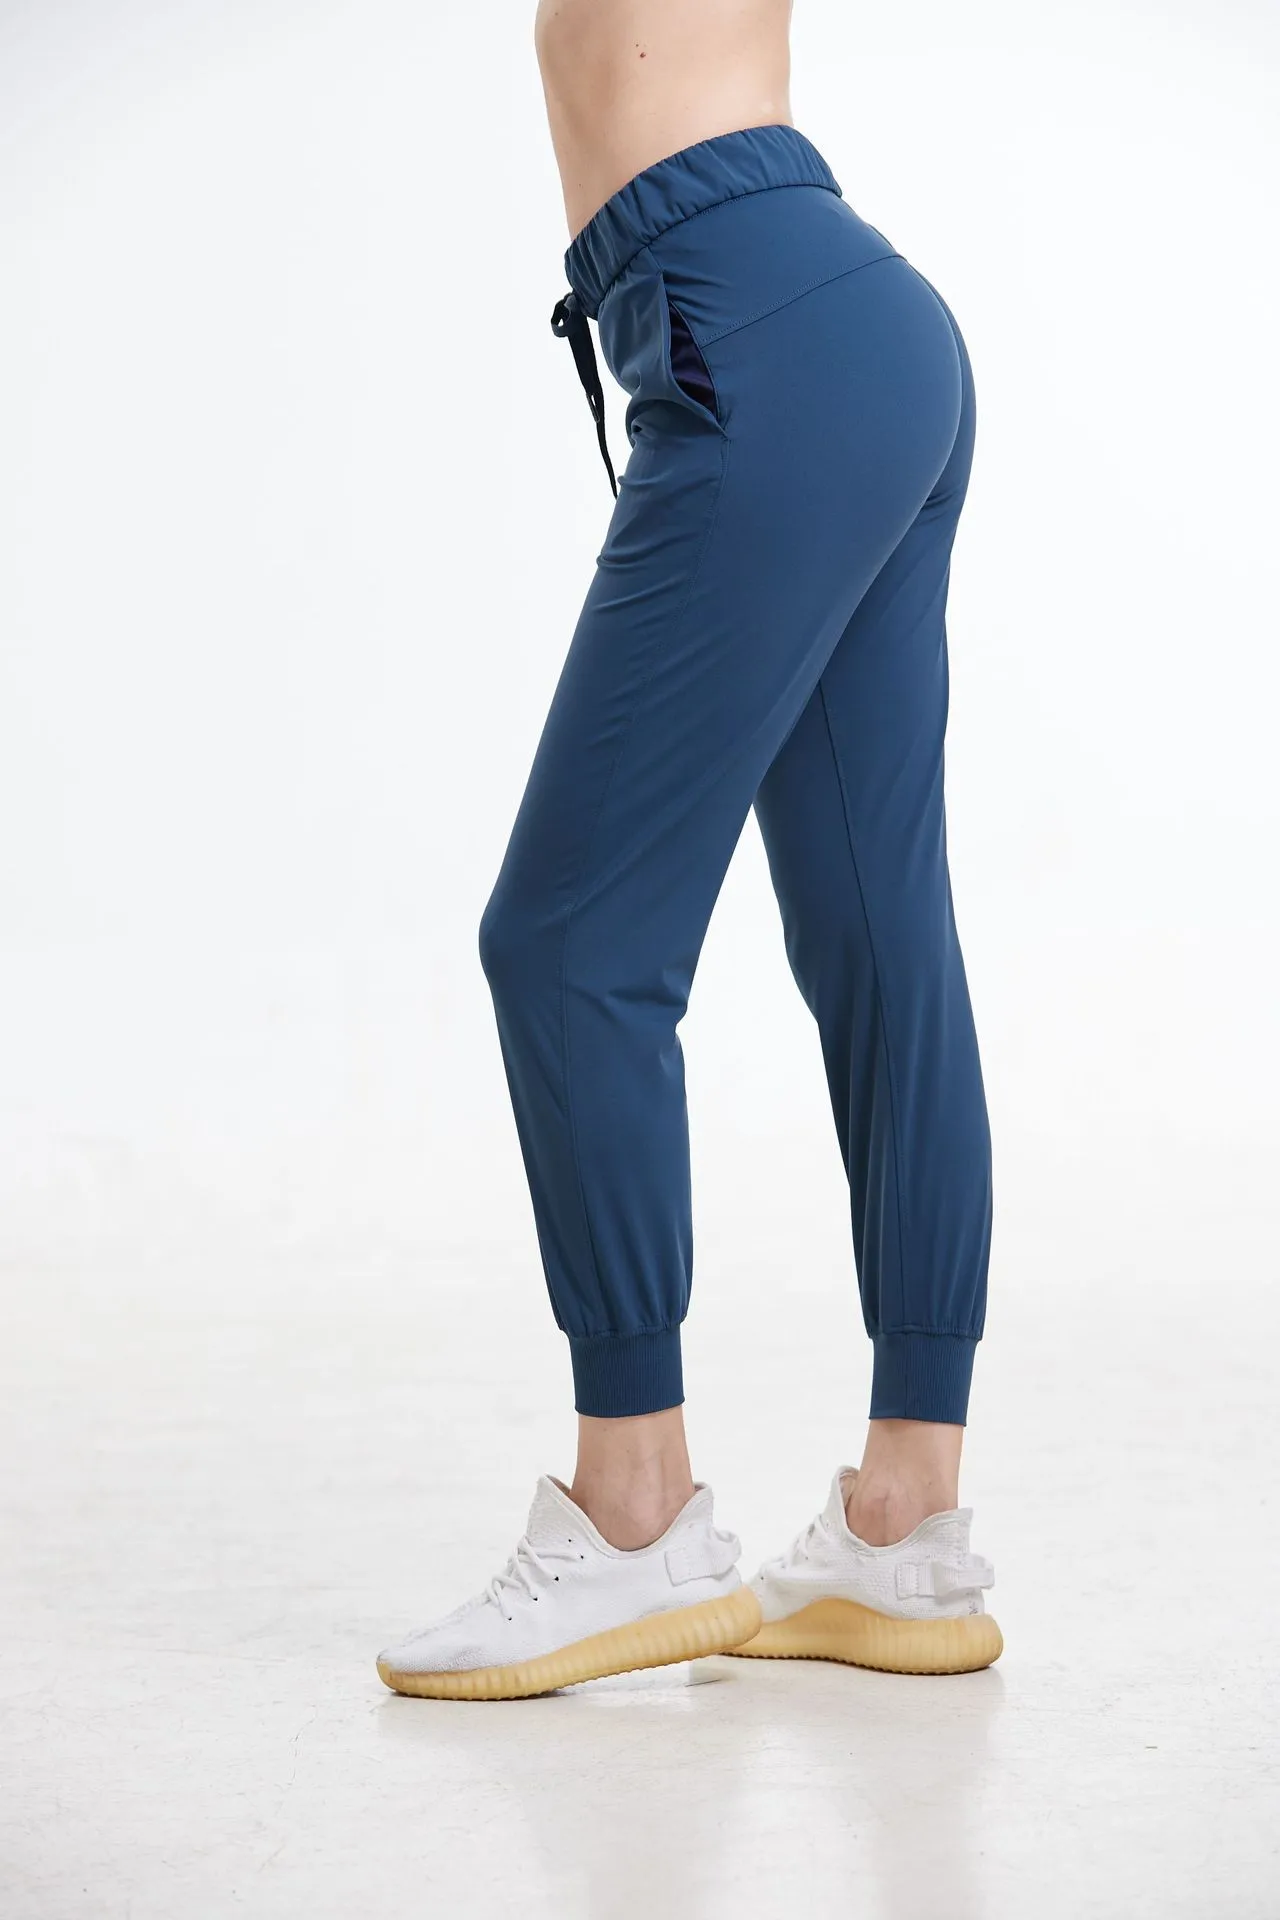 Pantalones De Yoga De Cintura Alta Para Mujer, Pantalones